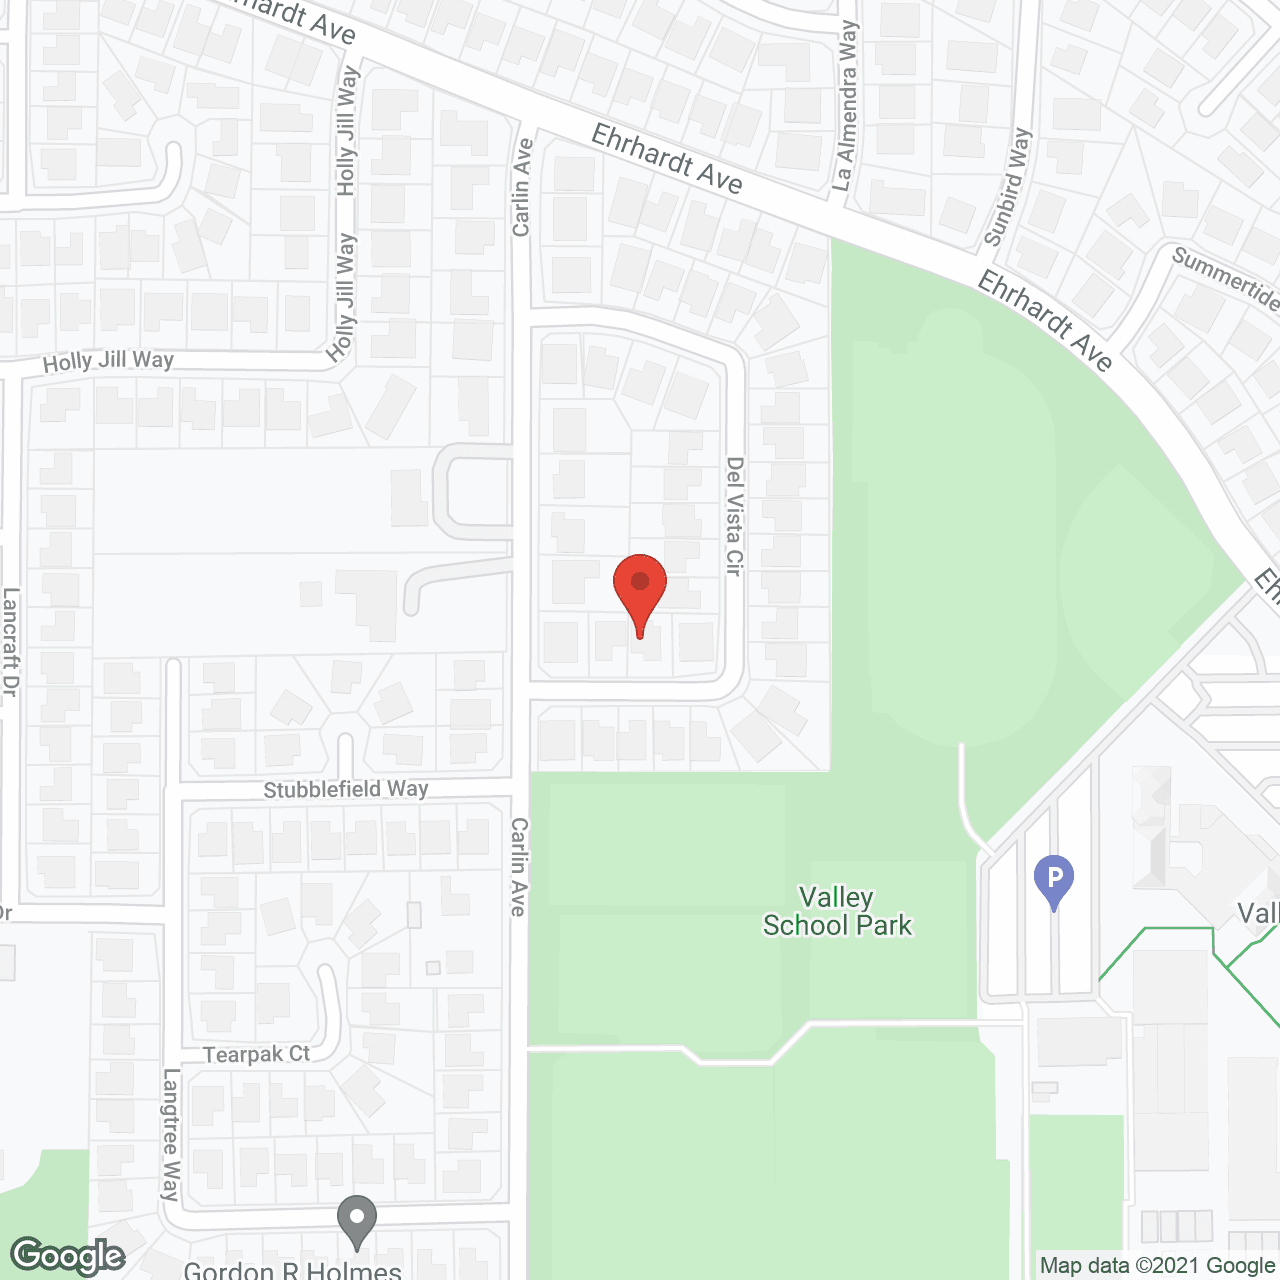 Del Vista Residential Care Home in google map